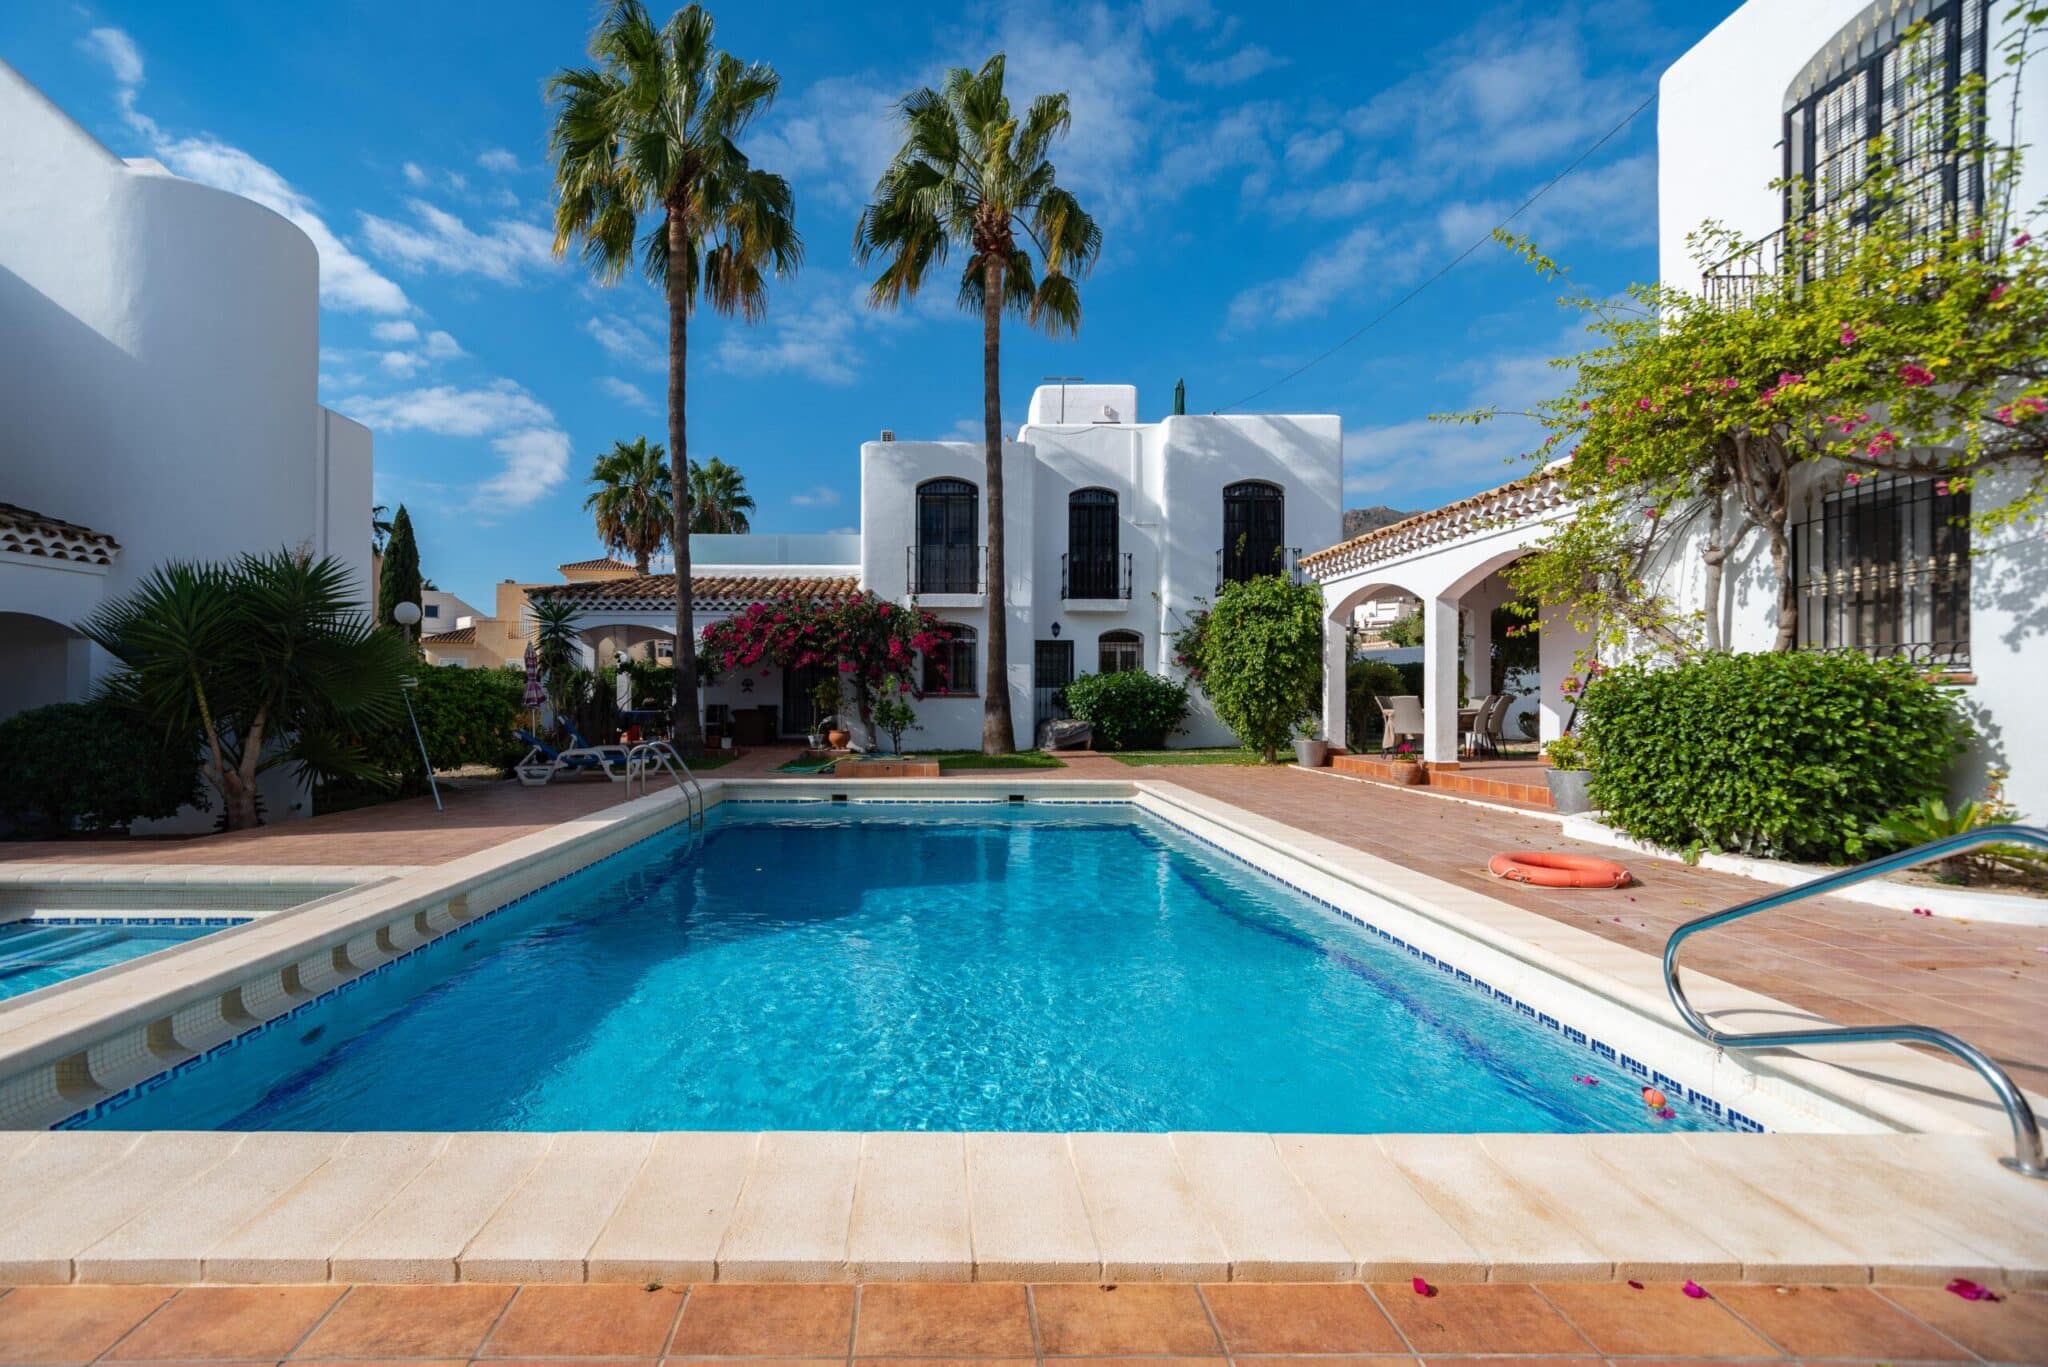 Villa Te koop in Mojacar in Spanje, gelegen aan de Costa de Almería